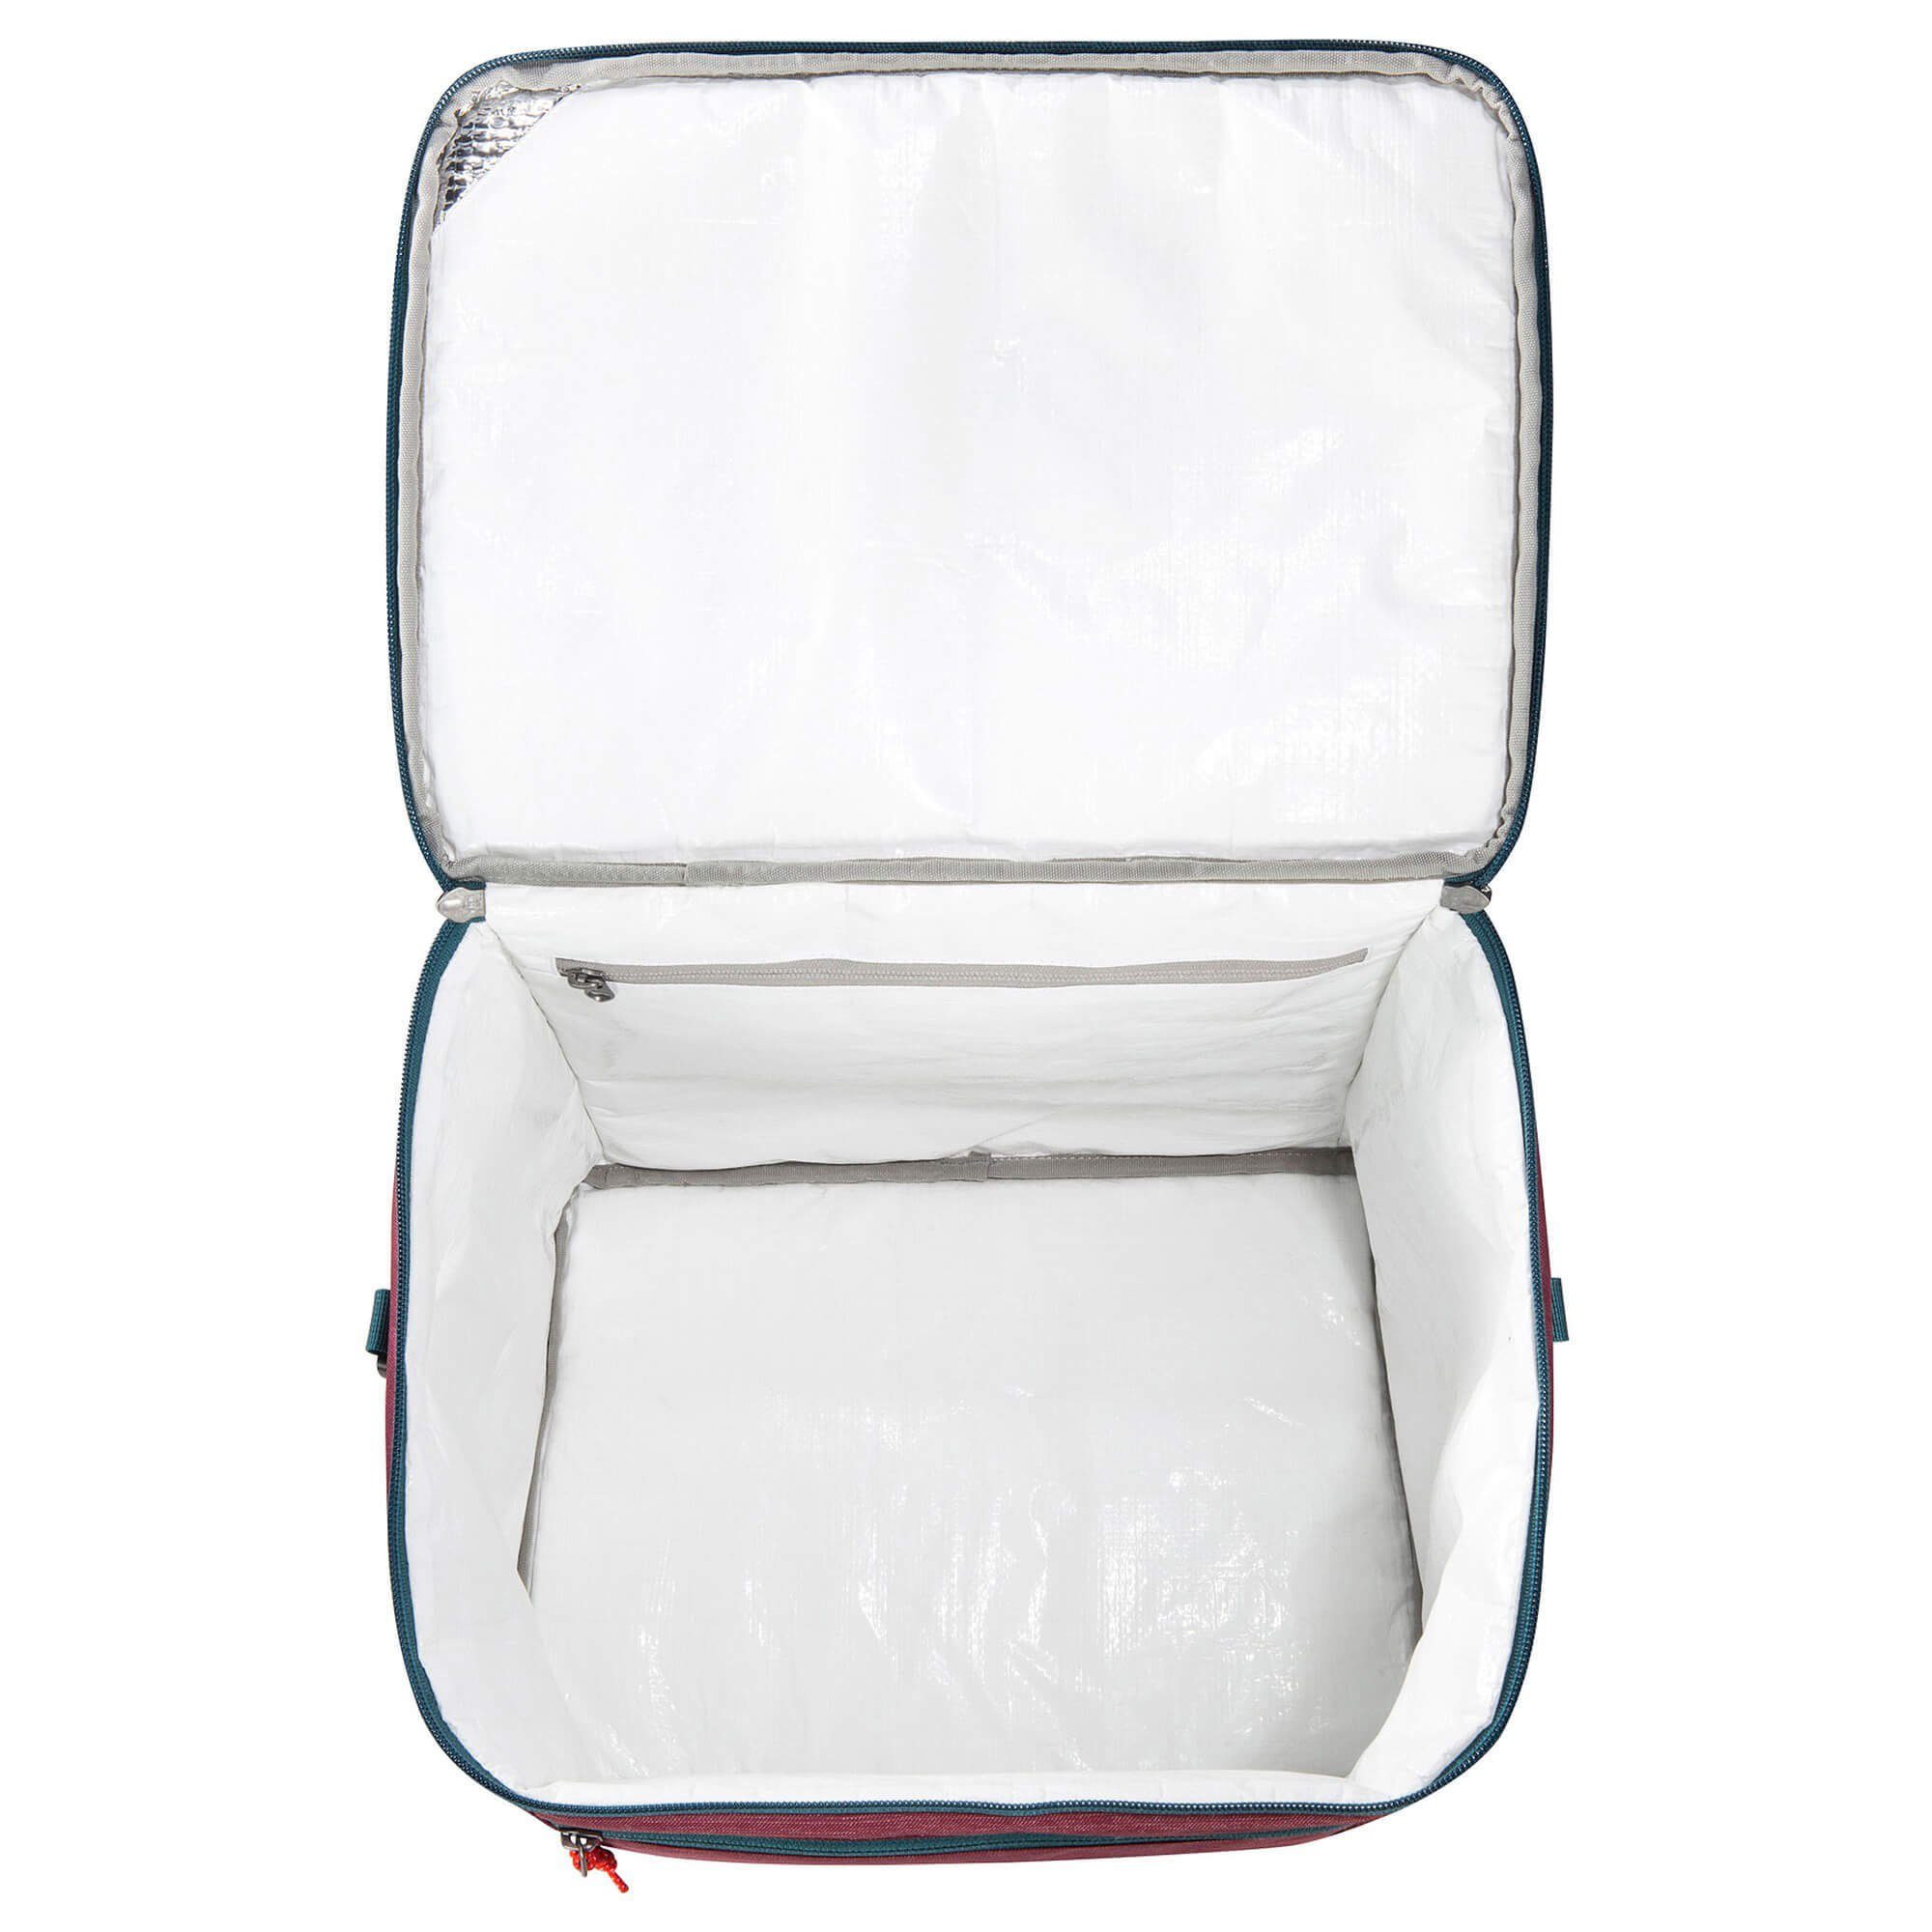 TATONKA® Einkaufsbeutel Cooler Bag L l Kühltasche navy - cm, 37 25